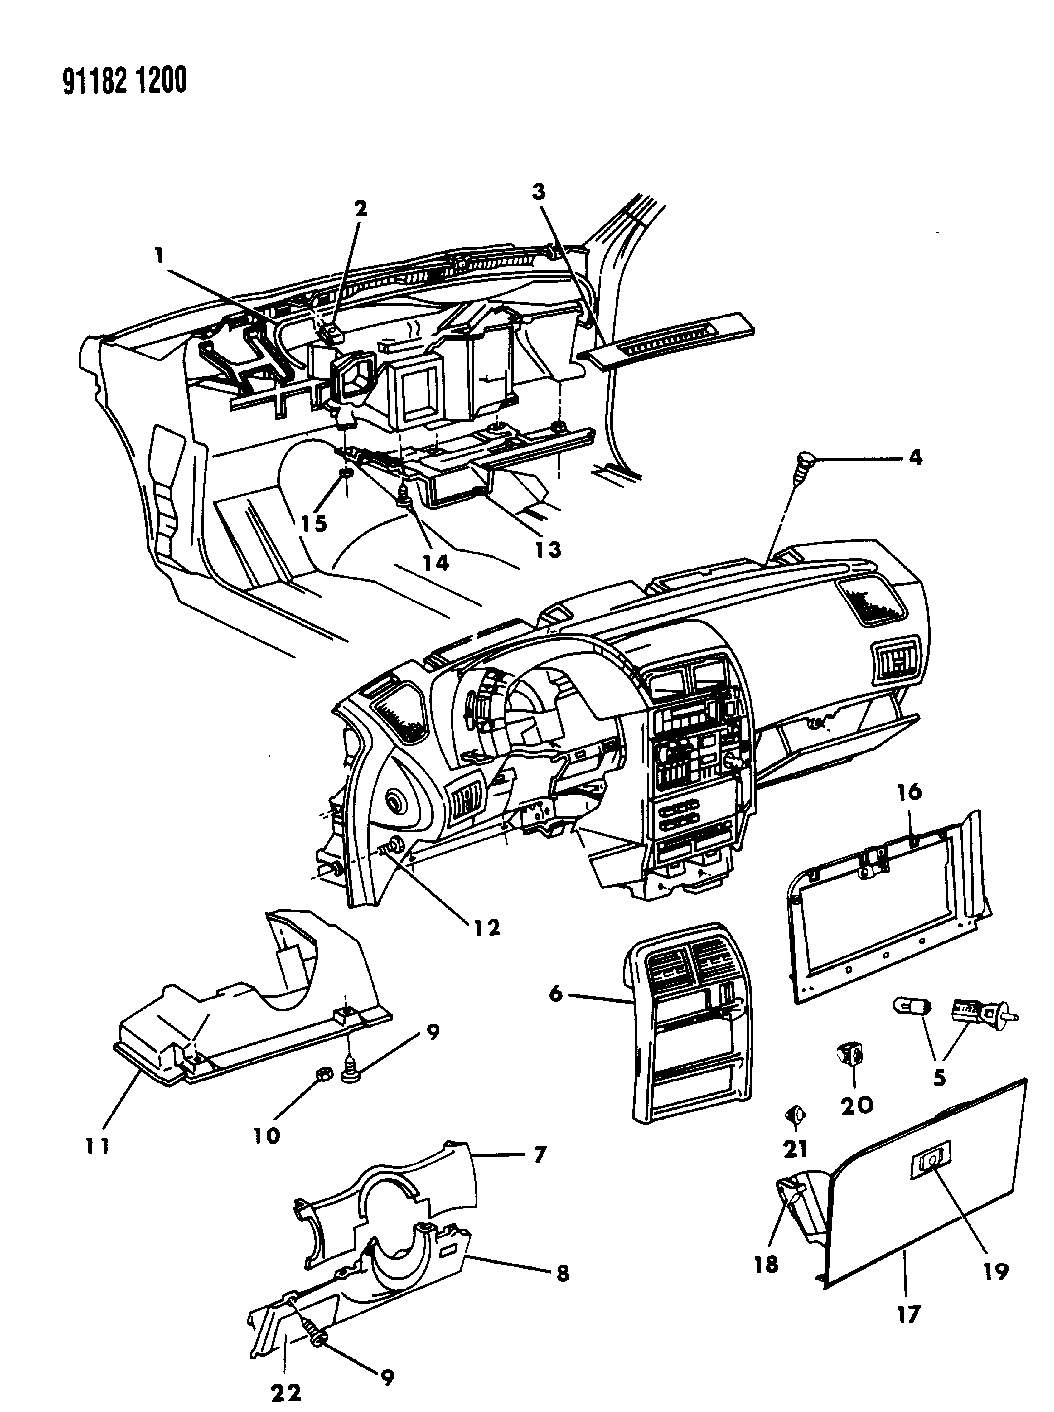 1991 Chrysler Lebaron Wiring Diagram - Wiring Diagram Schema